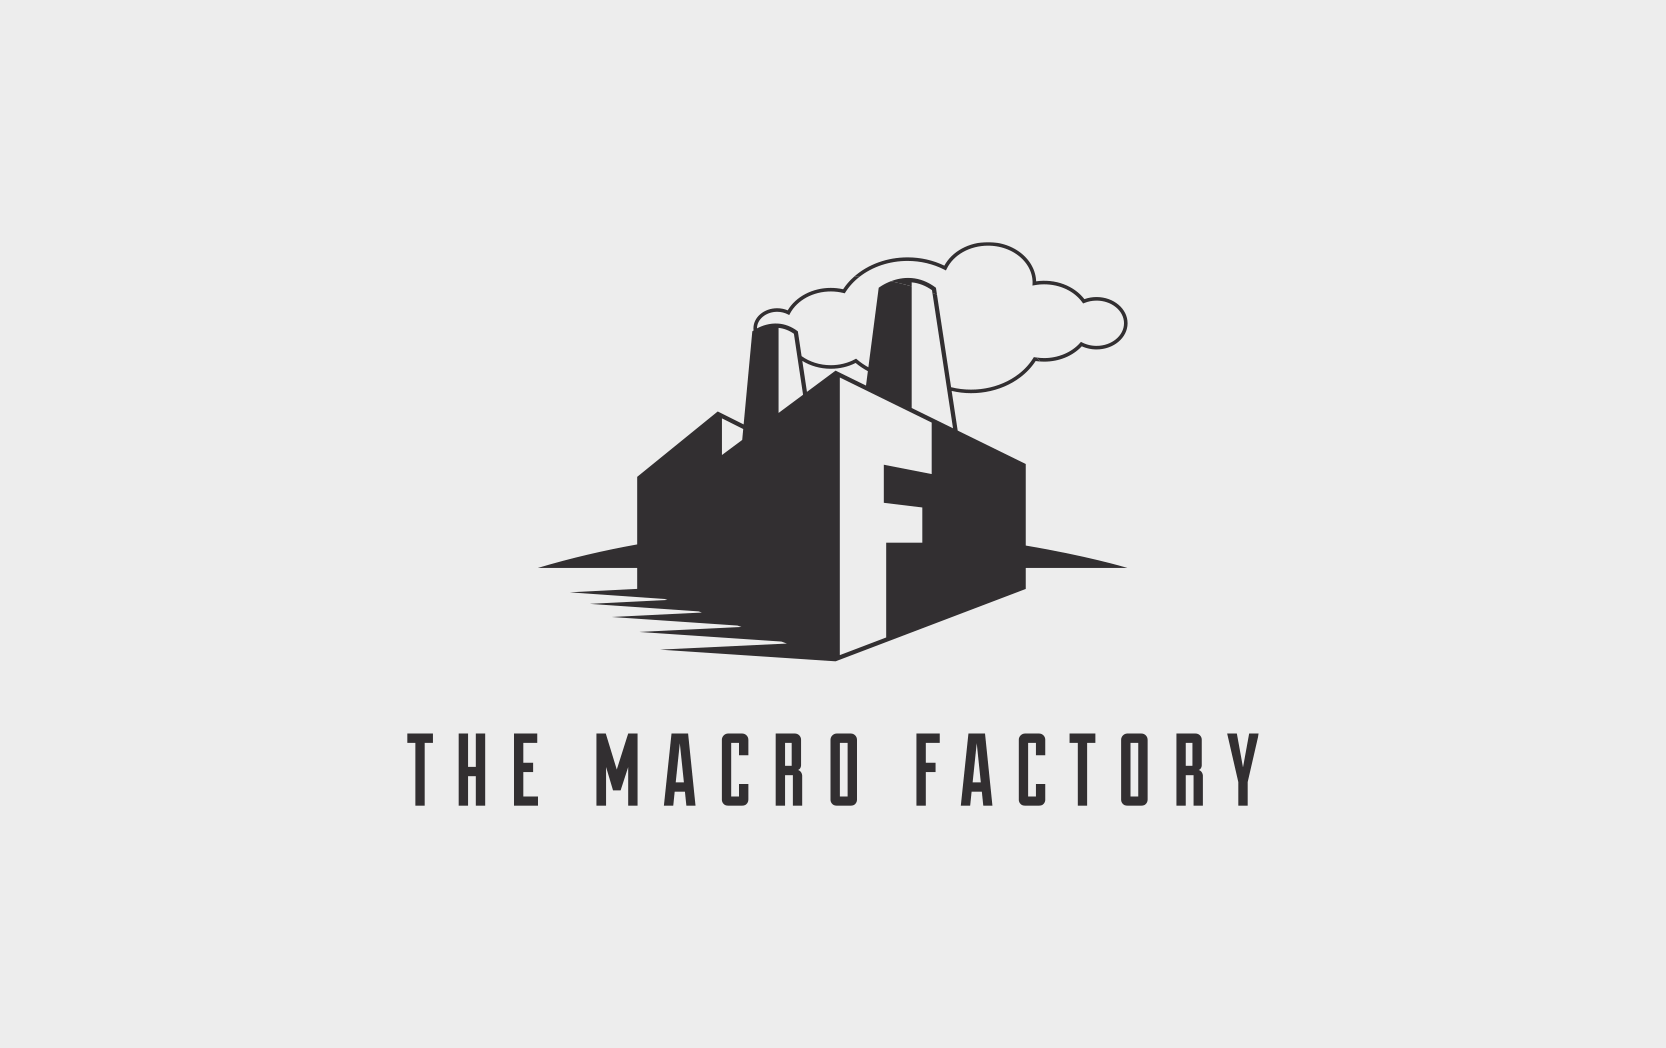 The Macro Factory